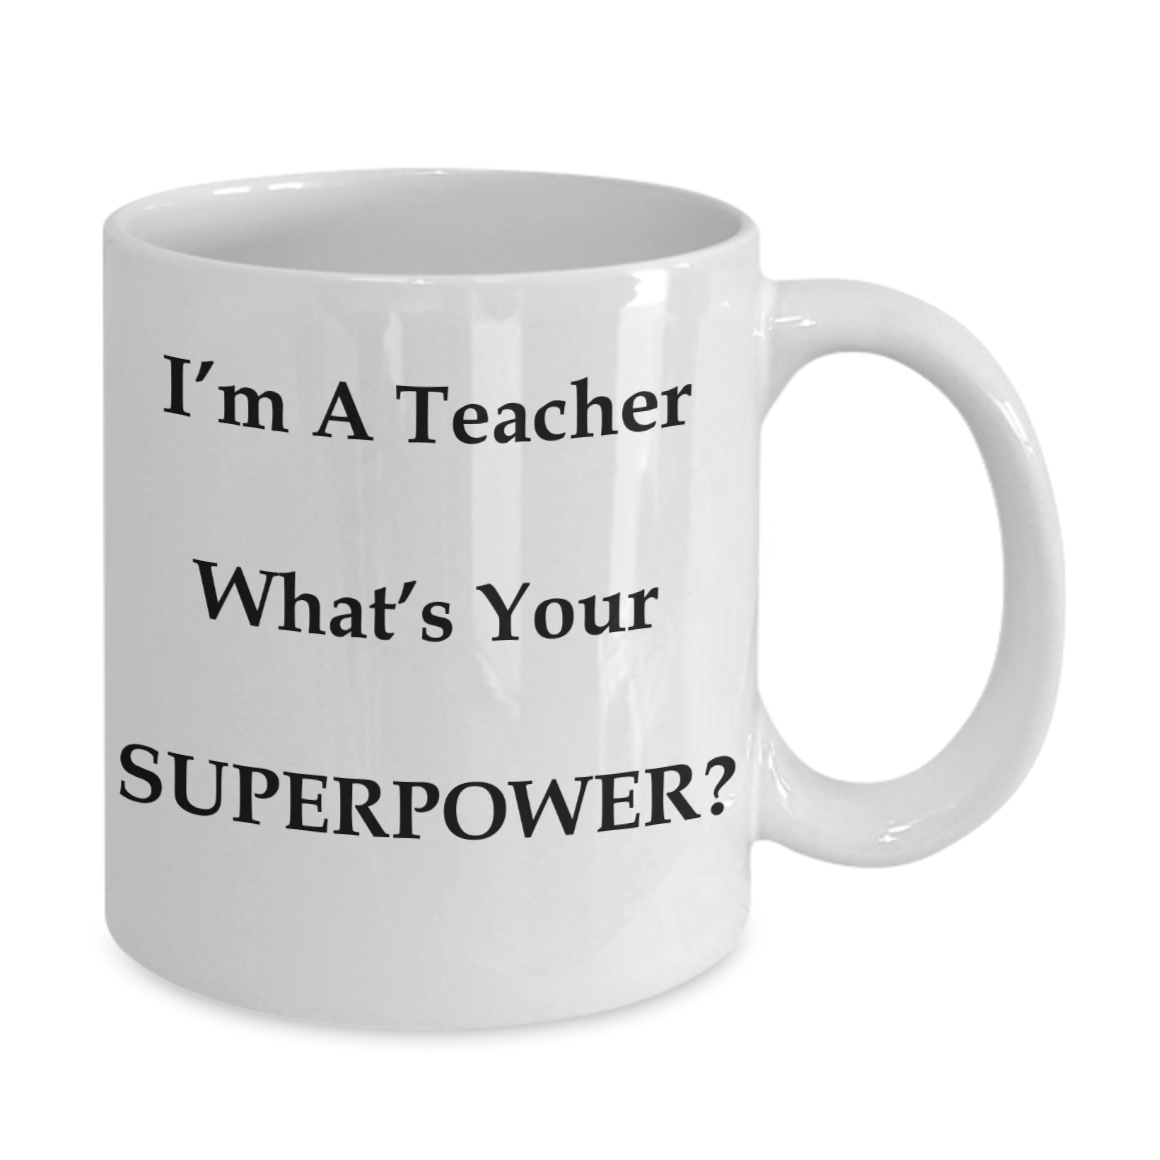 I'm a Teacher Superpower Coffee Mug